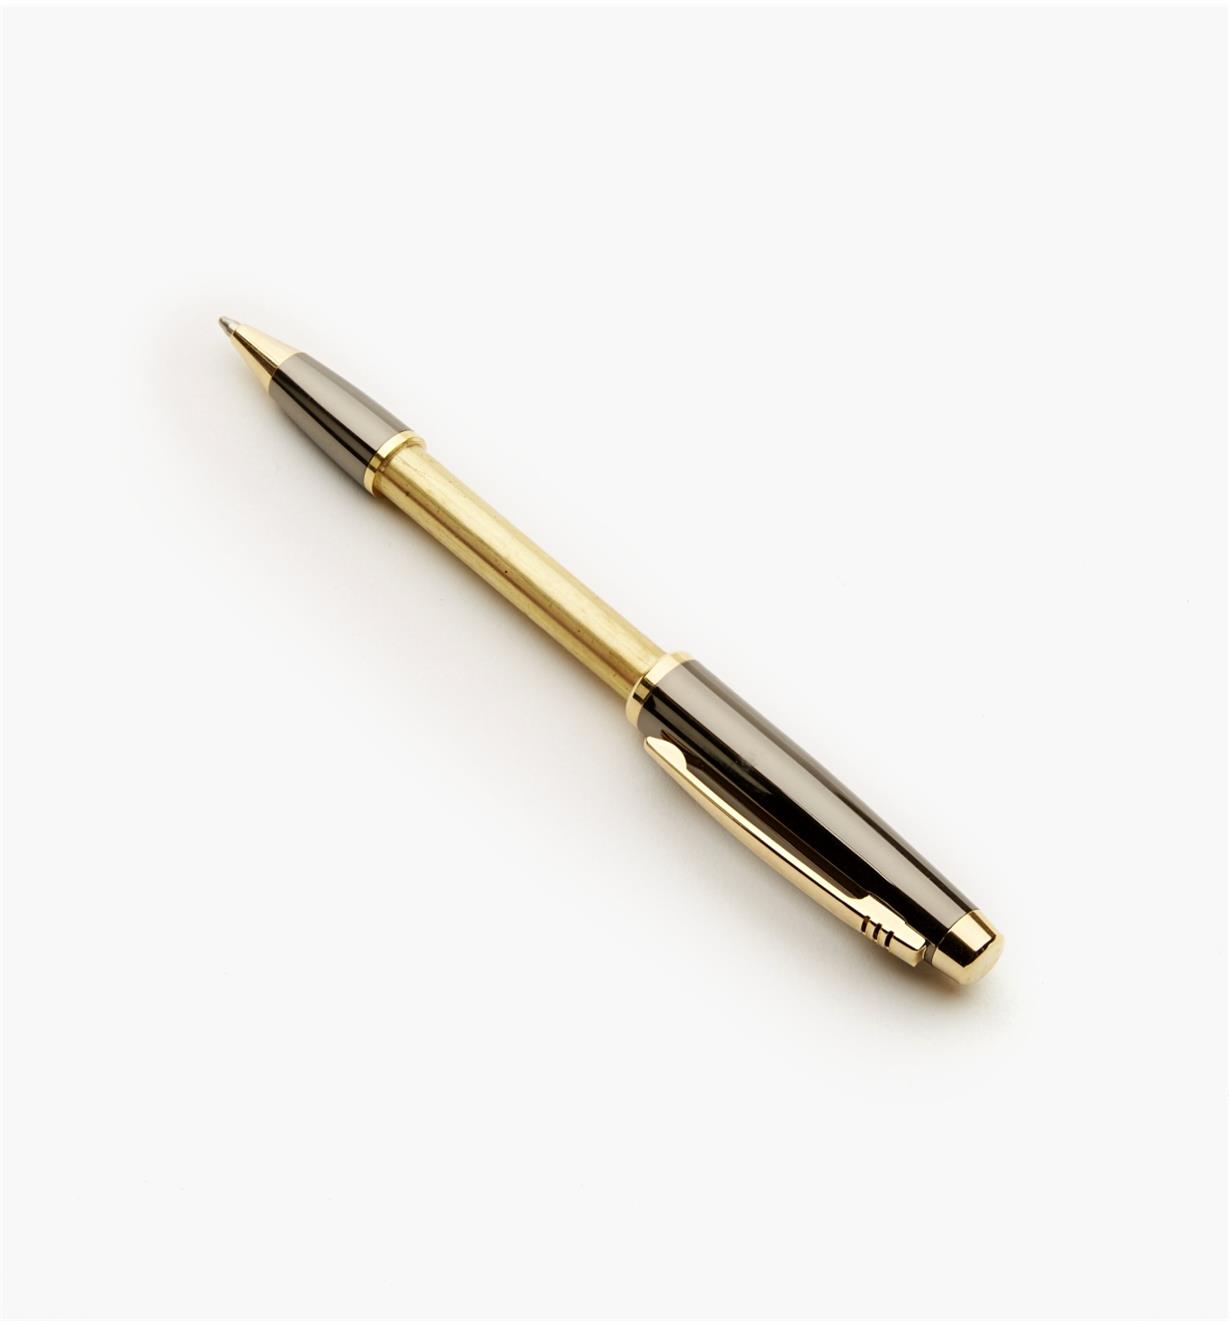 88K8292 - Geta Ballpoint Pen, Gunmetal/Gold